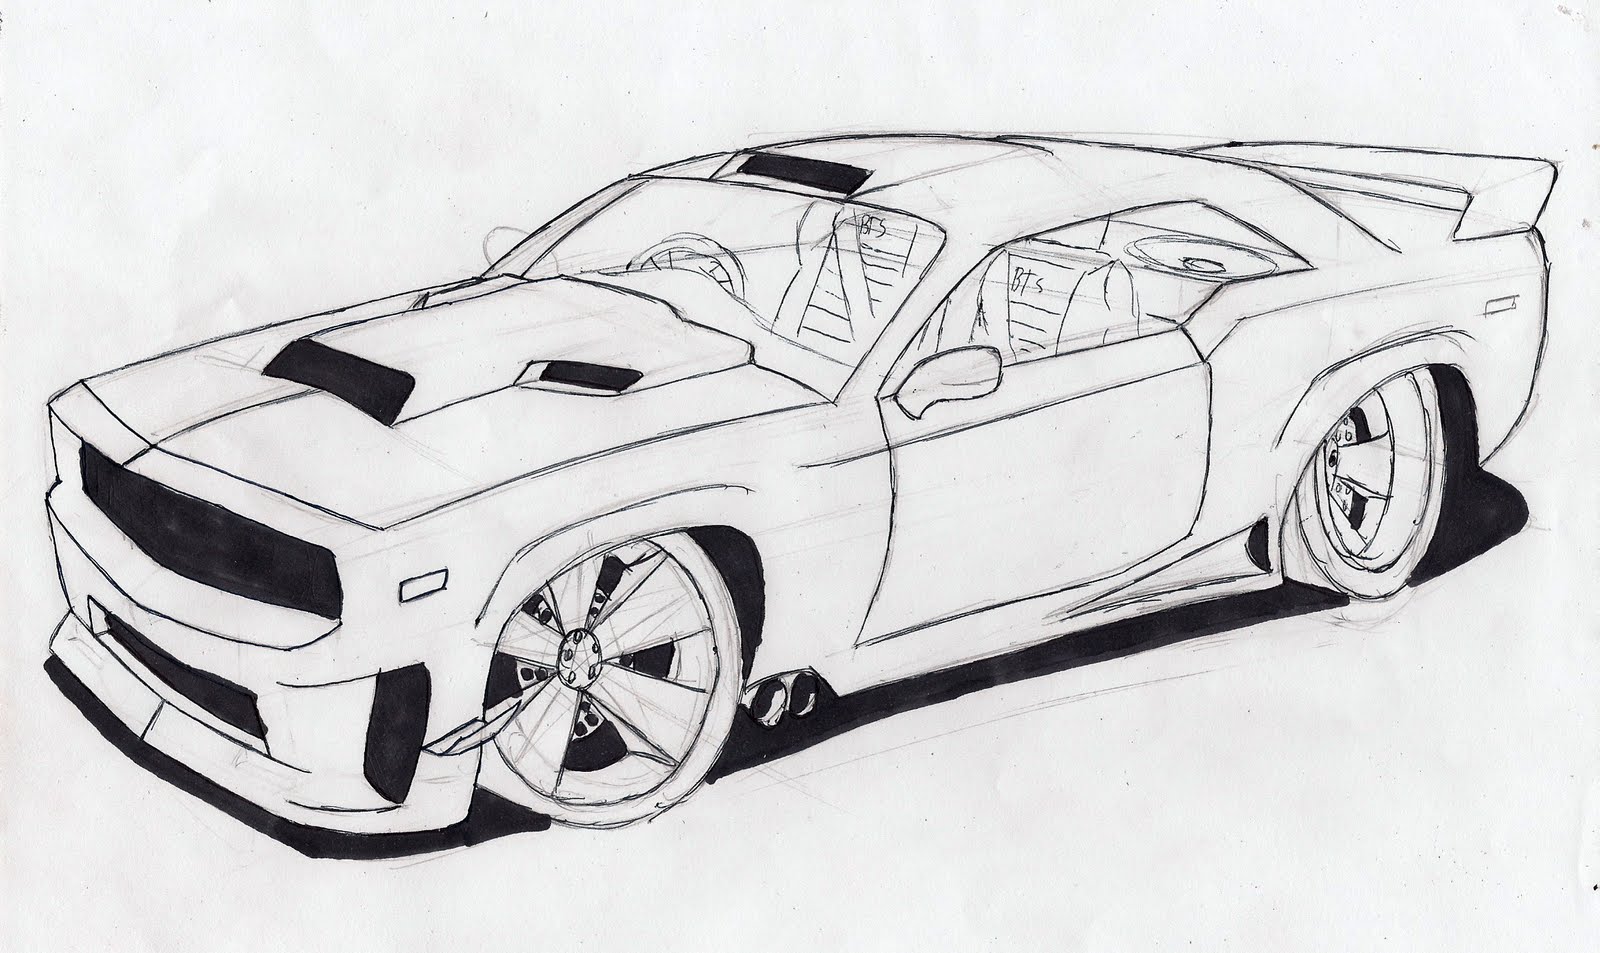 Cars to draw - Cool cars to draw - Cool Cars To Draw | Management ...